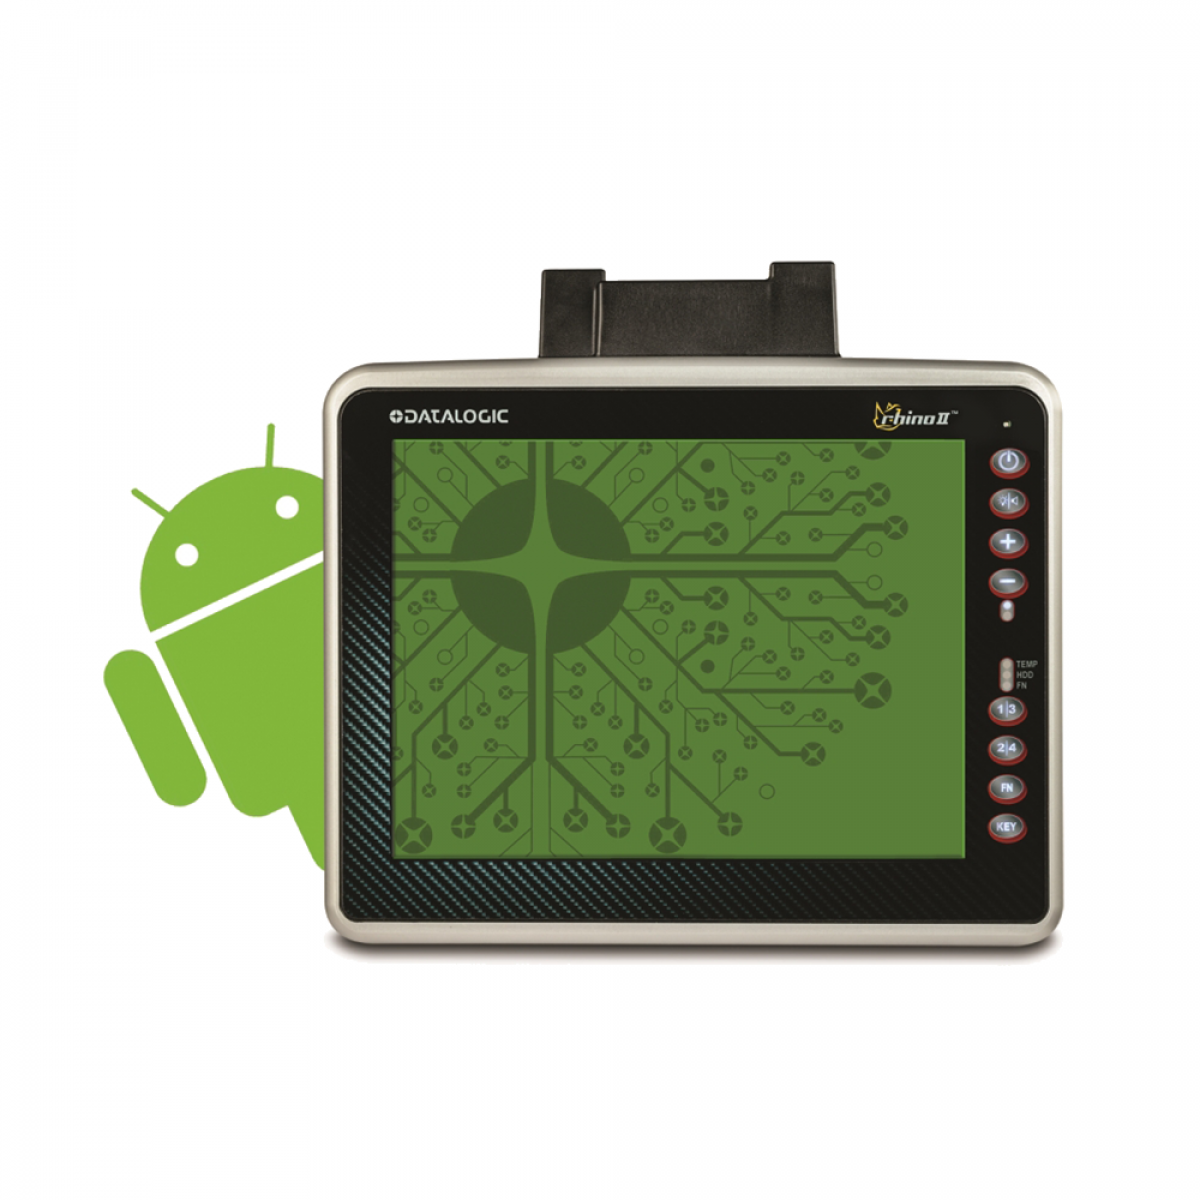 Datalogic Rhino II vehicle mount terminal - Android version